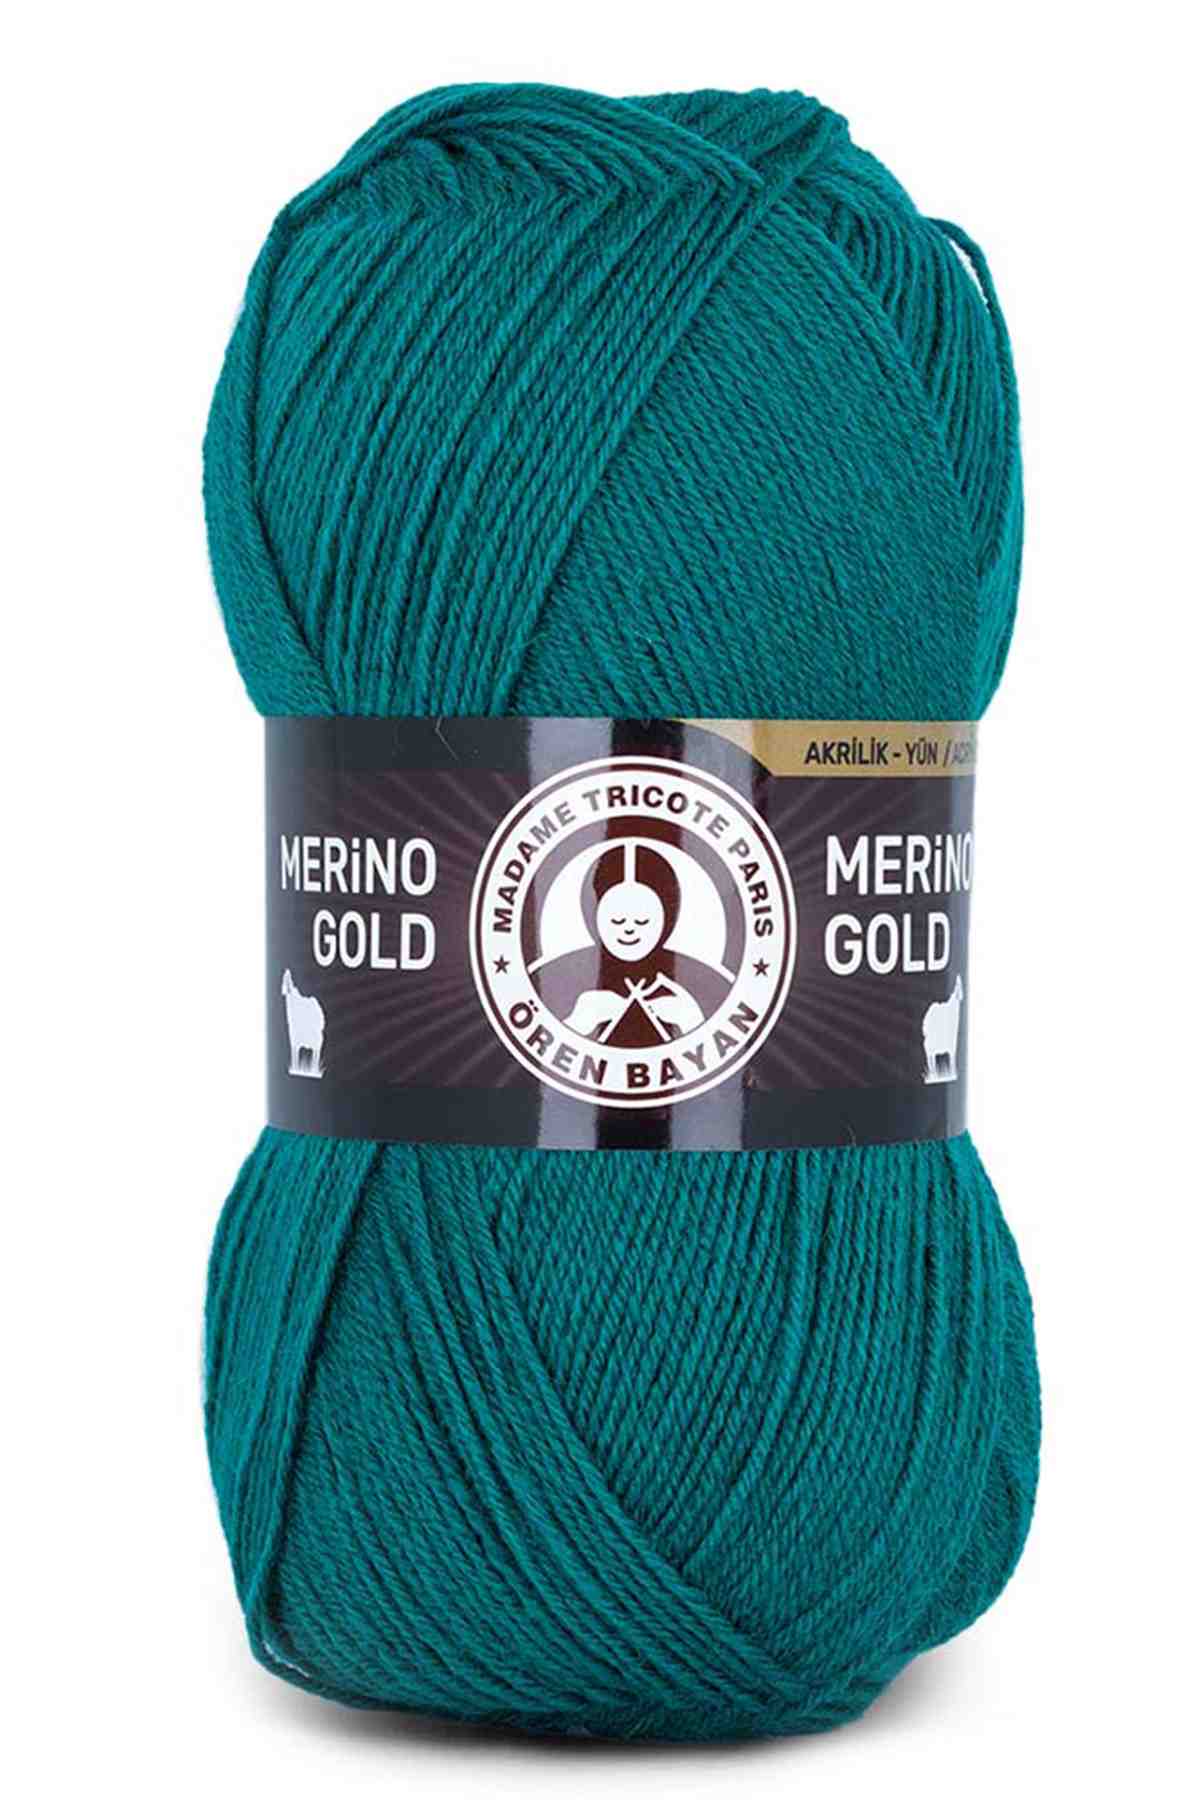 Madame Tricote Paris Merino Gold 200 Wool Yarn